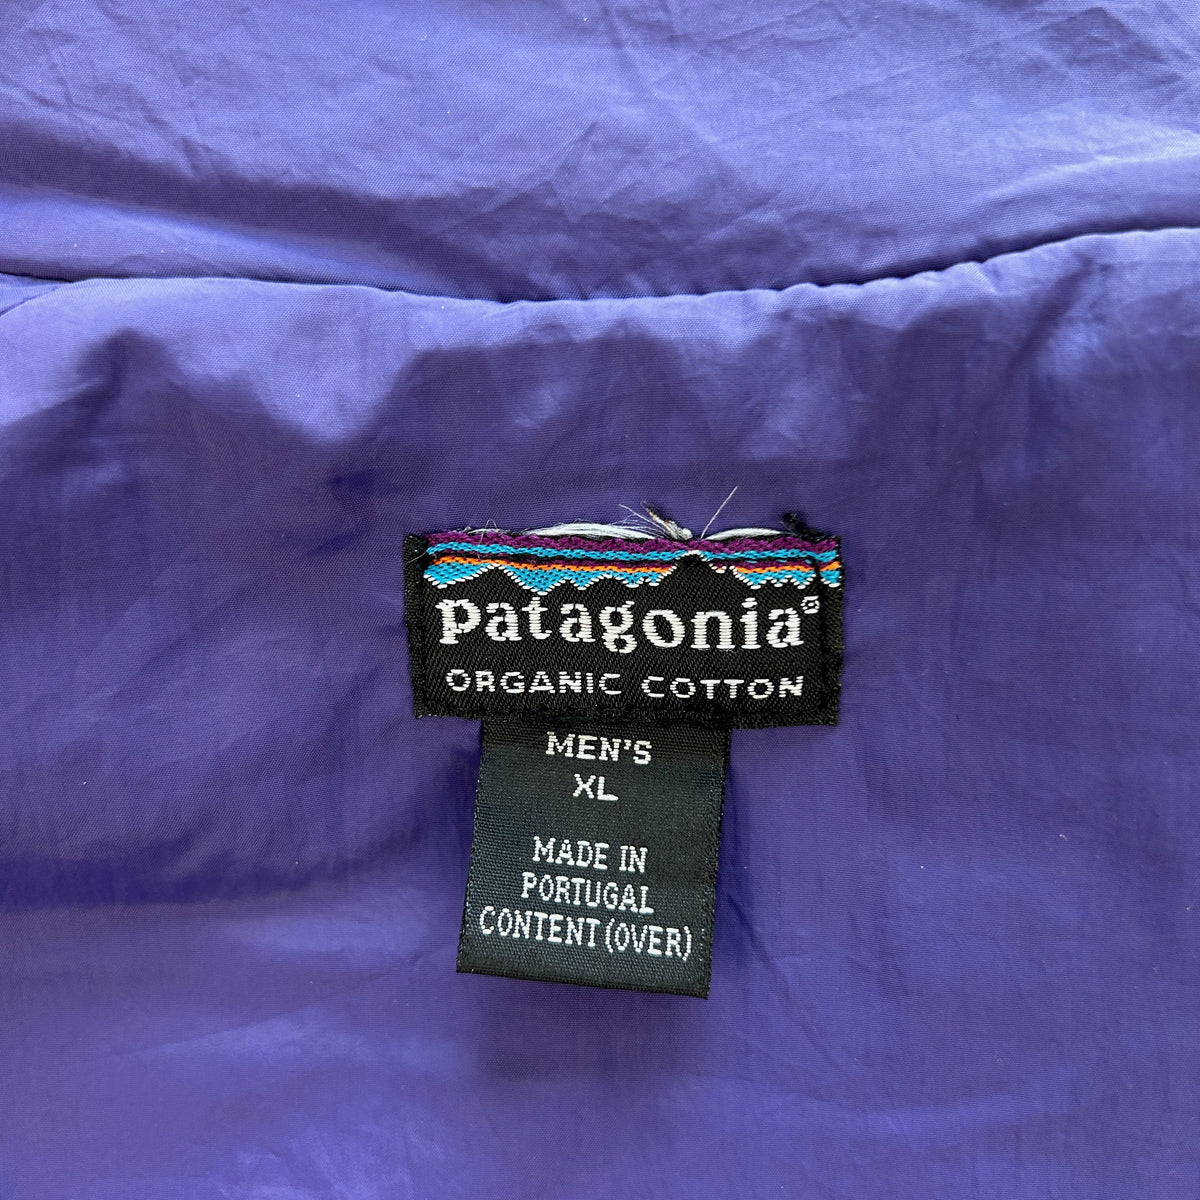 Vintage Patagonia Retro X Reversible Deep Pile Jacket Size S